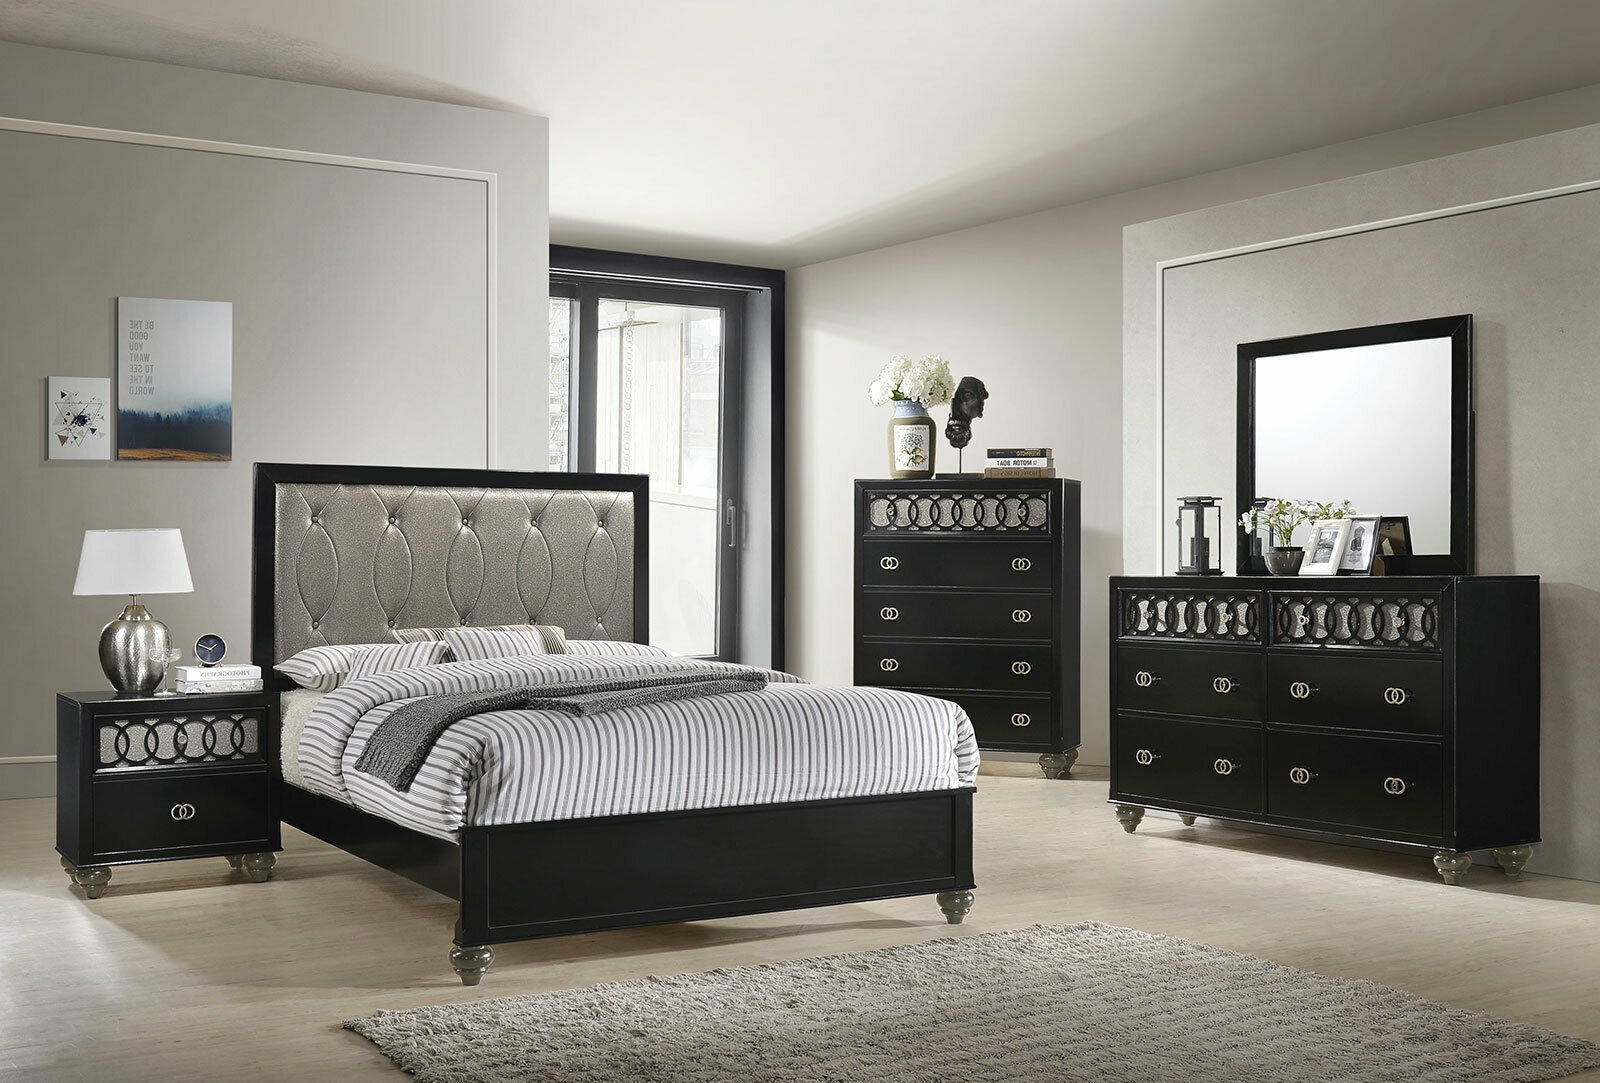 Modern black copper faux leather bedroom furniture